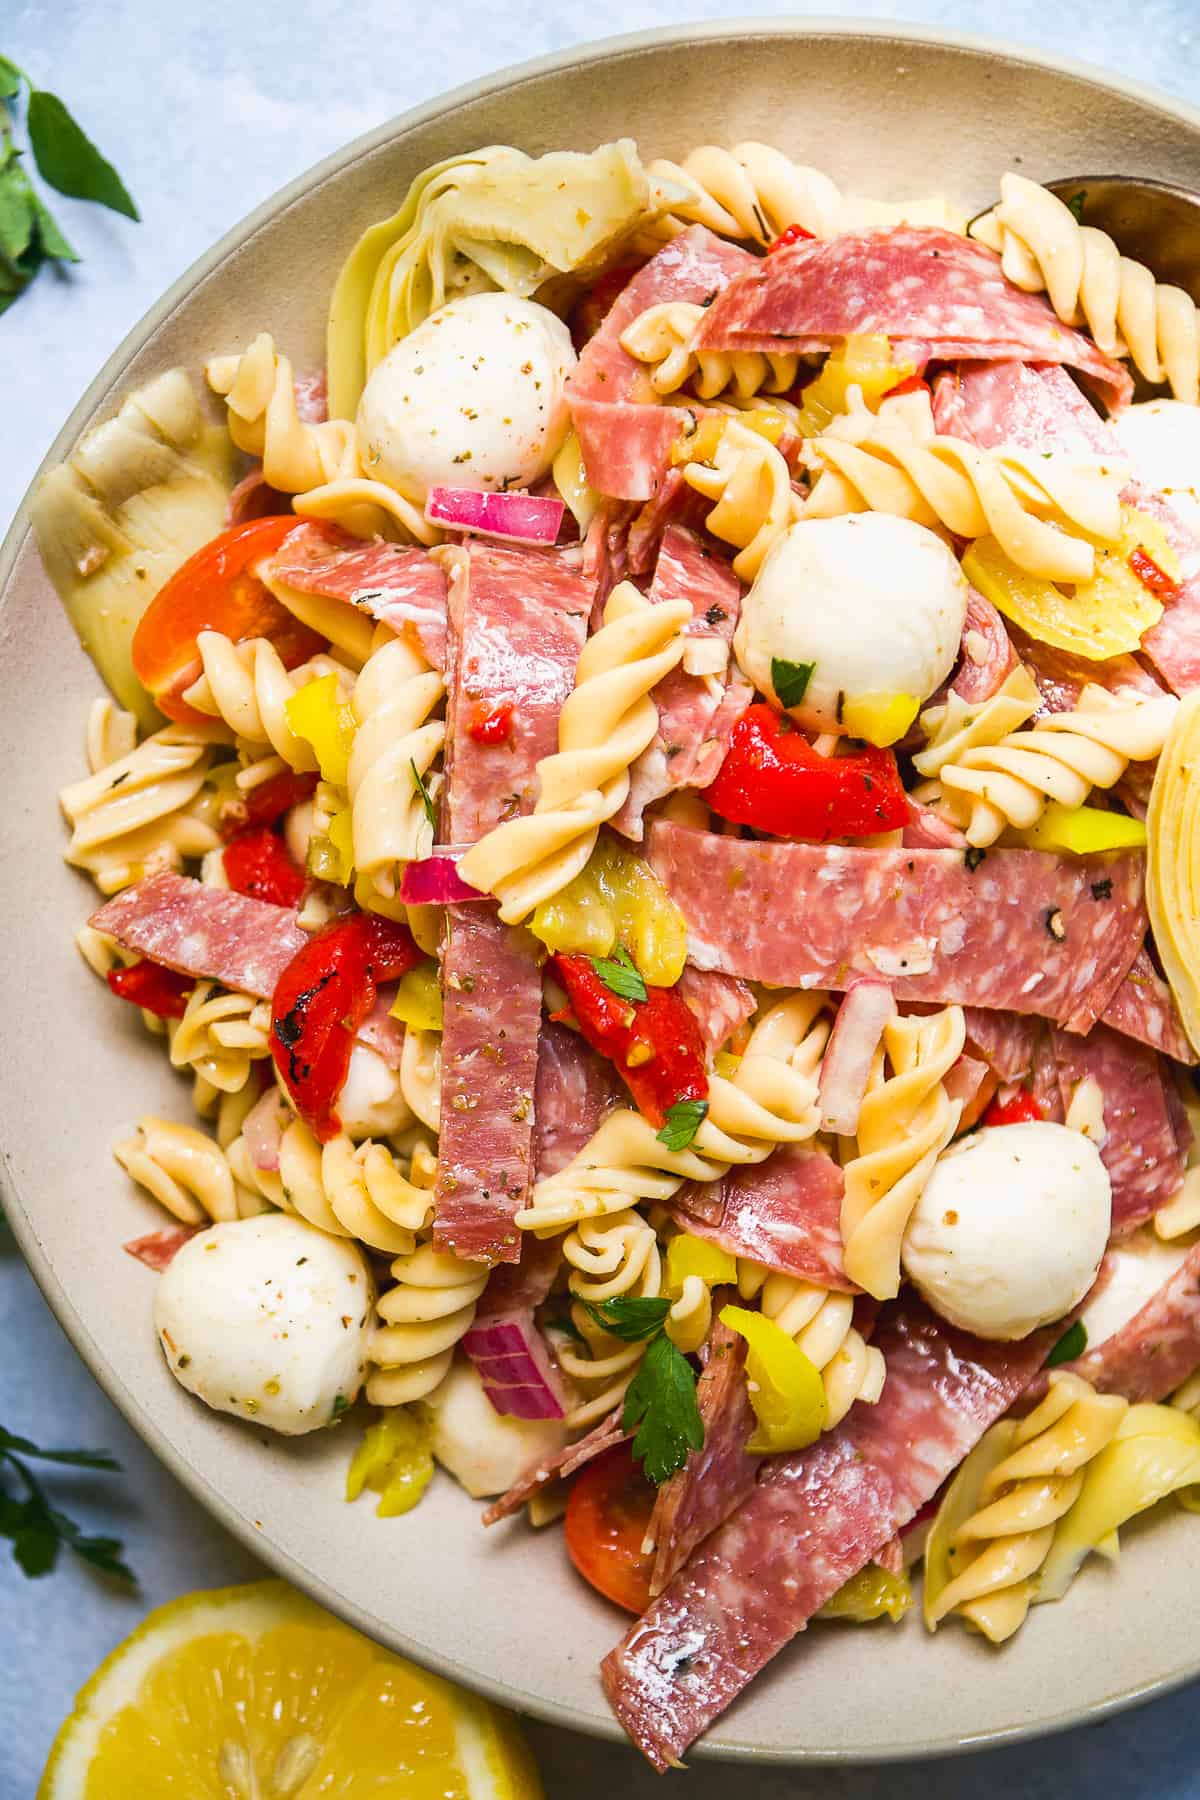 Plate of Italian pasta salad with mozzarella and salami.